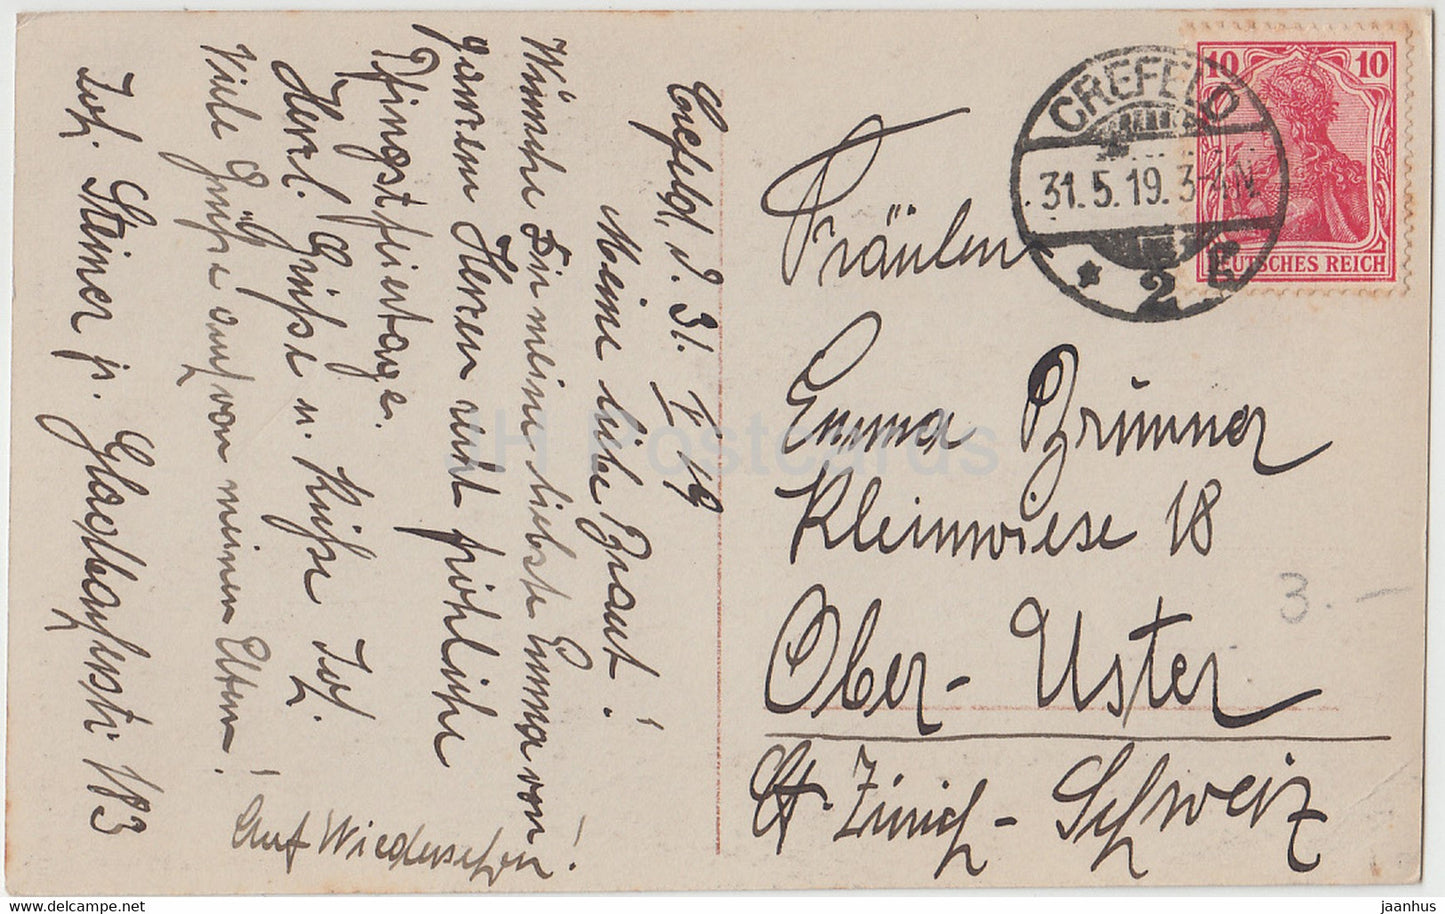 Pentecost Greeting Card - Innige Grusse zum pfingstfest - HB 7483/1 - boy - old postcard - 1919 - Germany - used